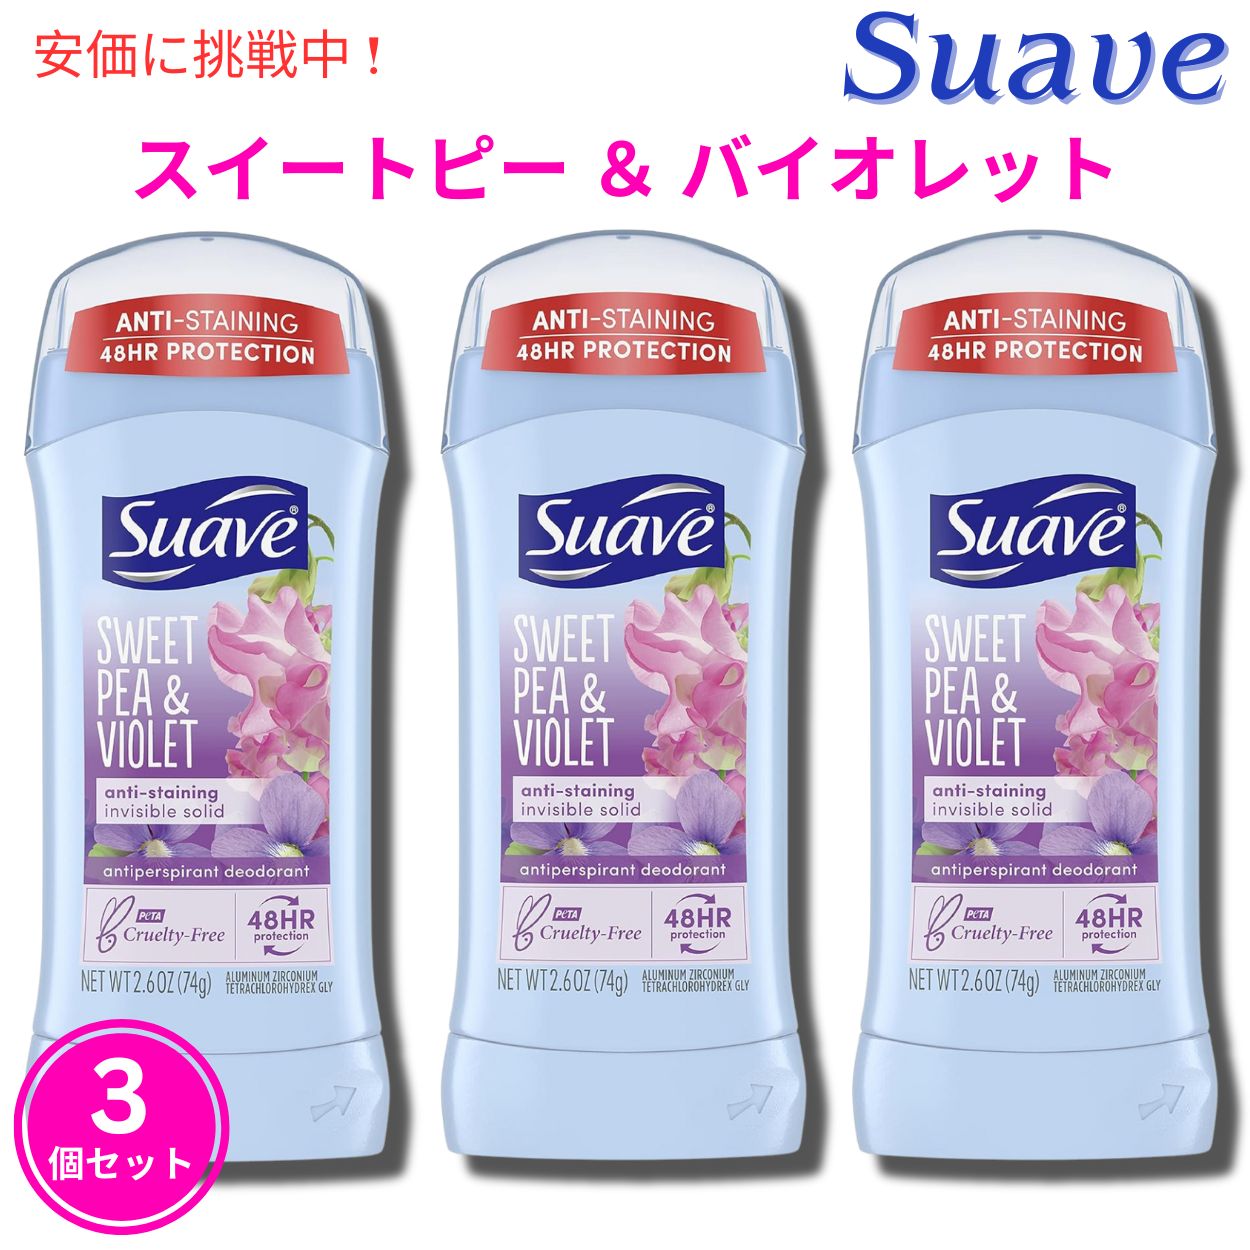 Sweetpea Violet Suave XA[u fIhg XC[gs[ oCIbg 74g XeBbN 3Zbg Deodorant Stick Set of 3